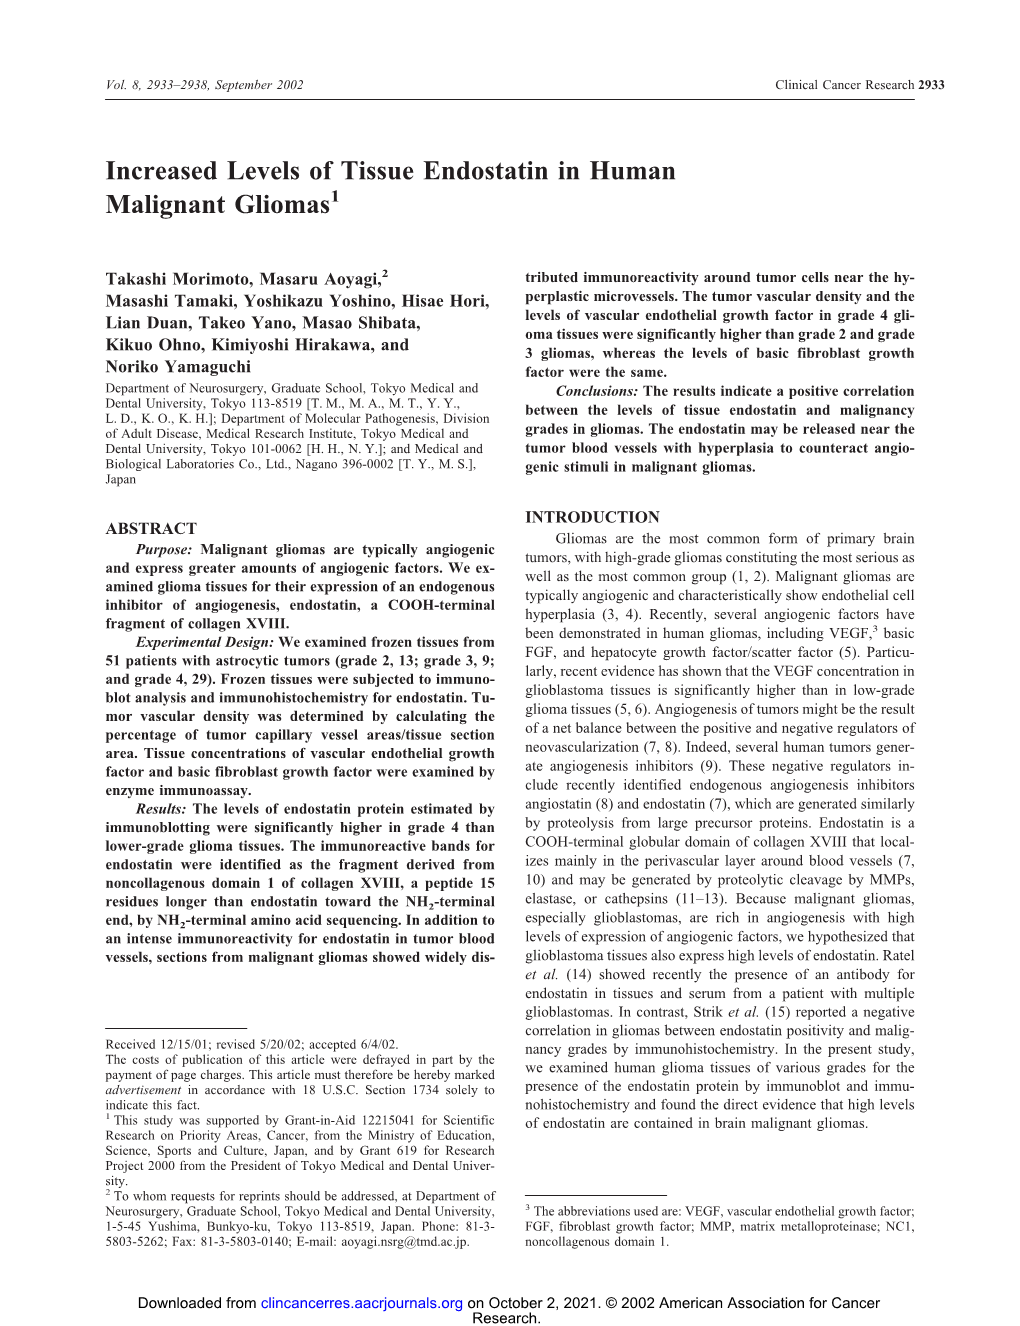 Increased Levels of Tissue Endostatin in Human Malignant Gliomas1